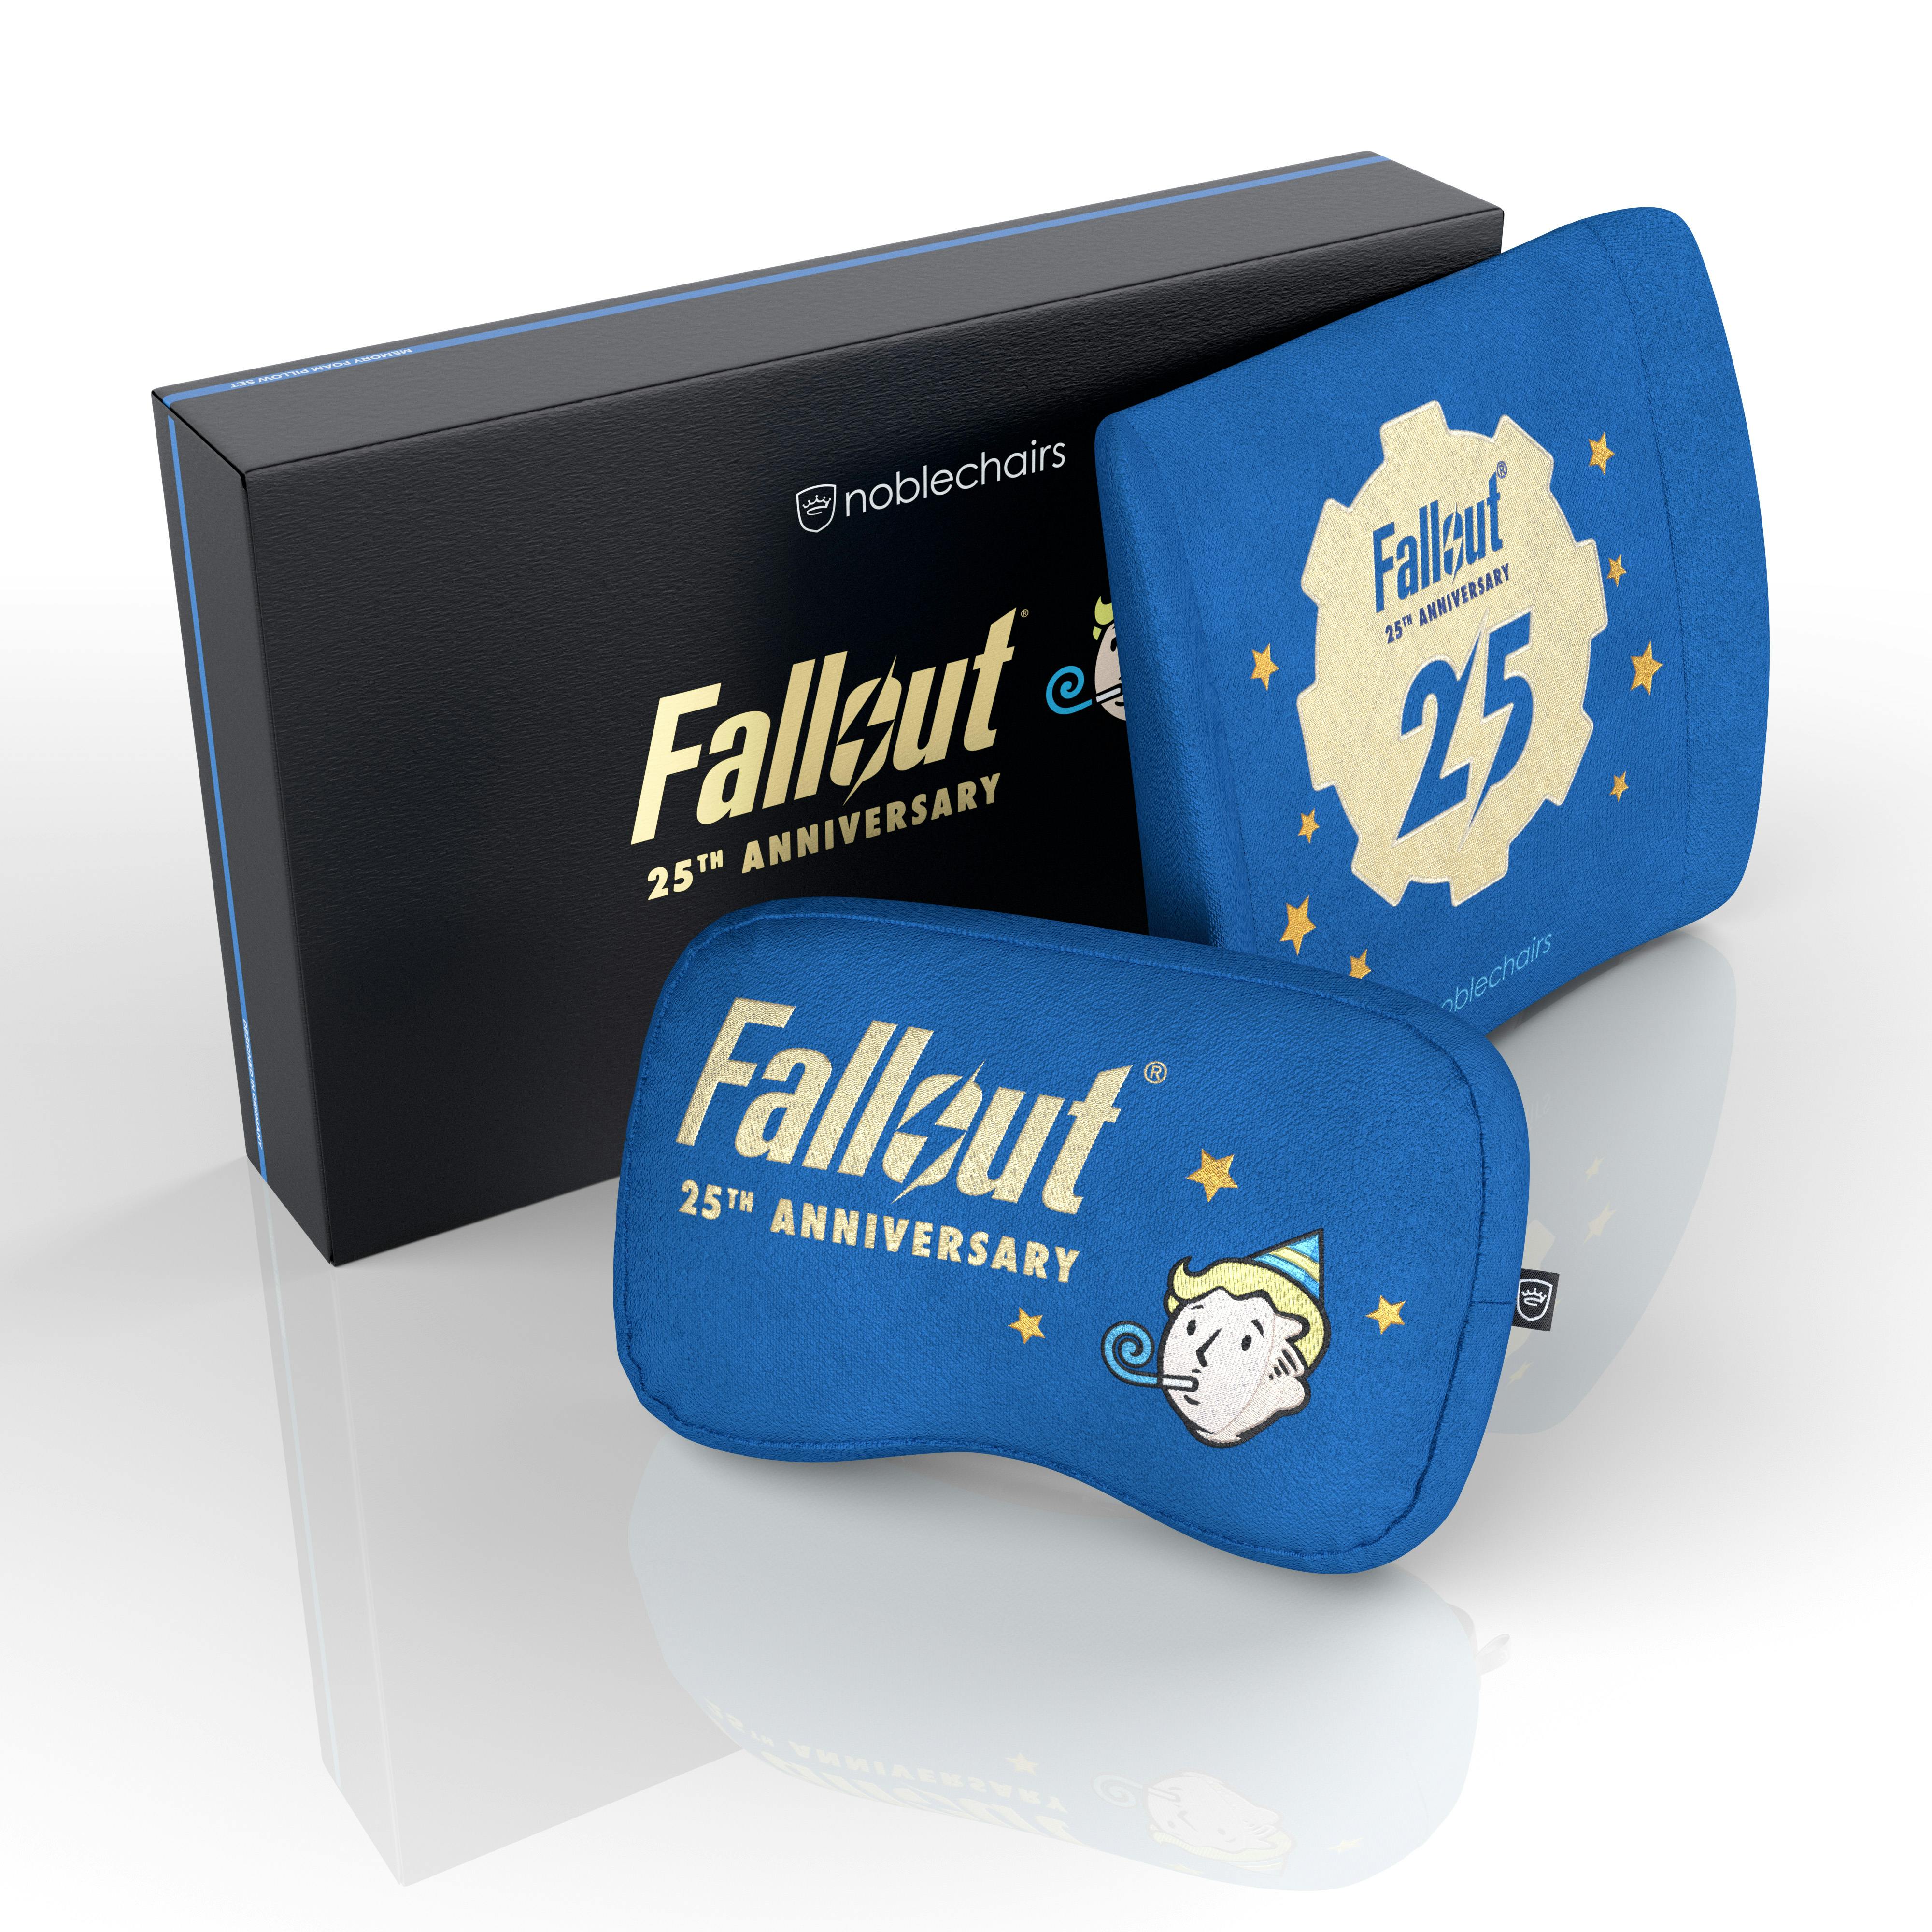  - Memory Foam Fallout 25th Anniversary Edition kussenset